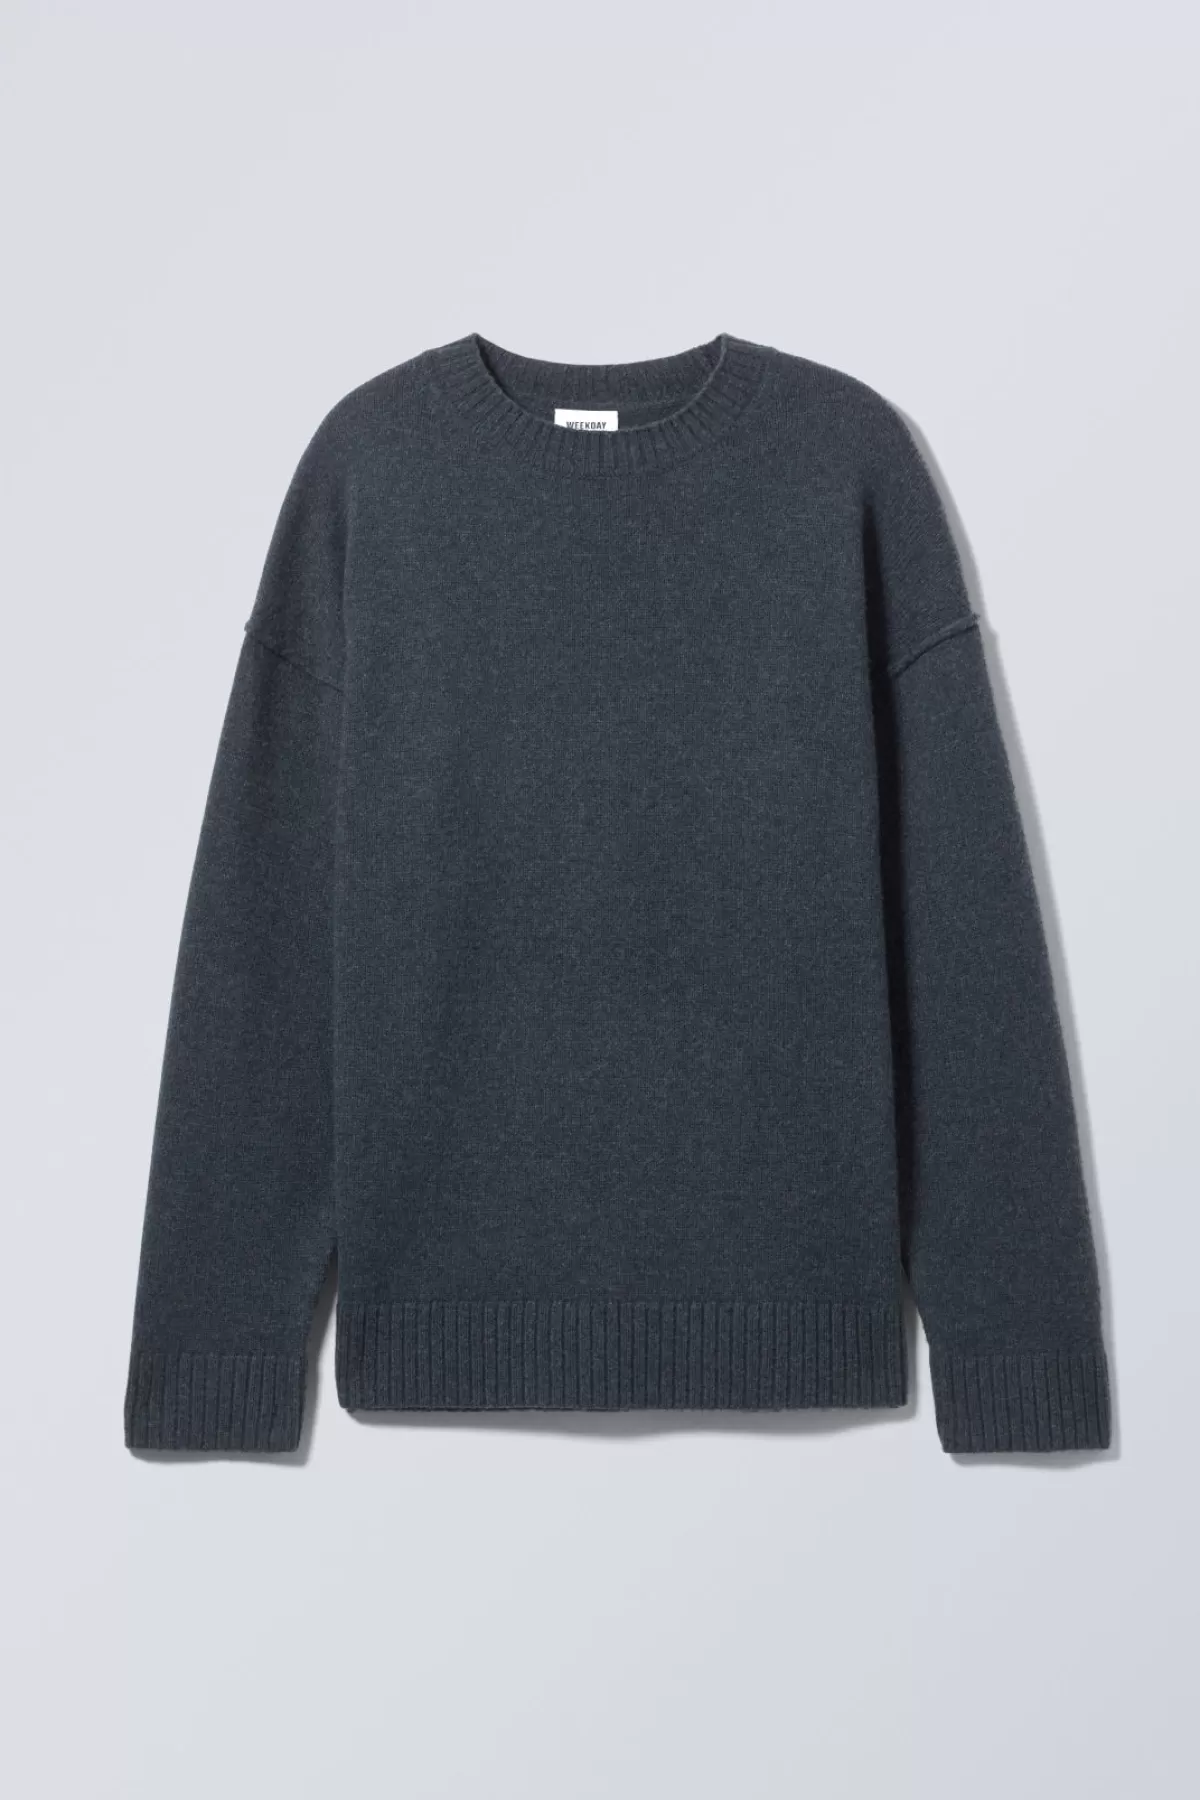 Weekday Eloise Oversized Wool Sweater Navy Cheap